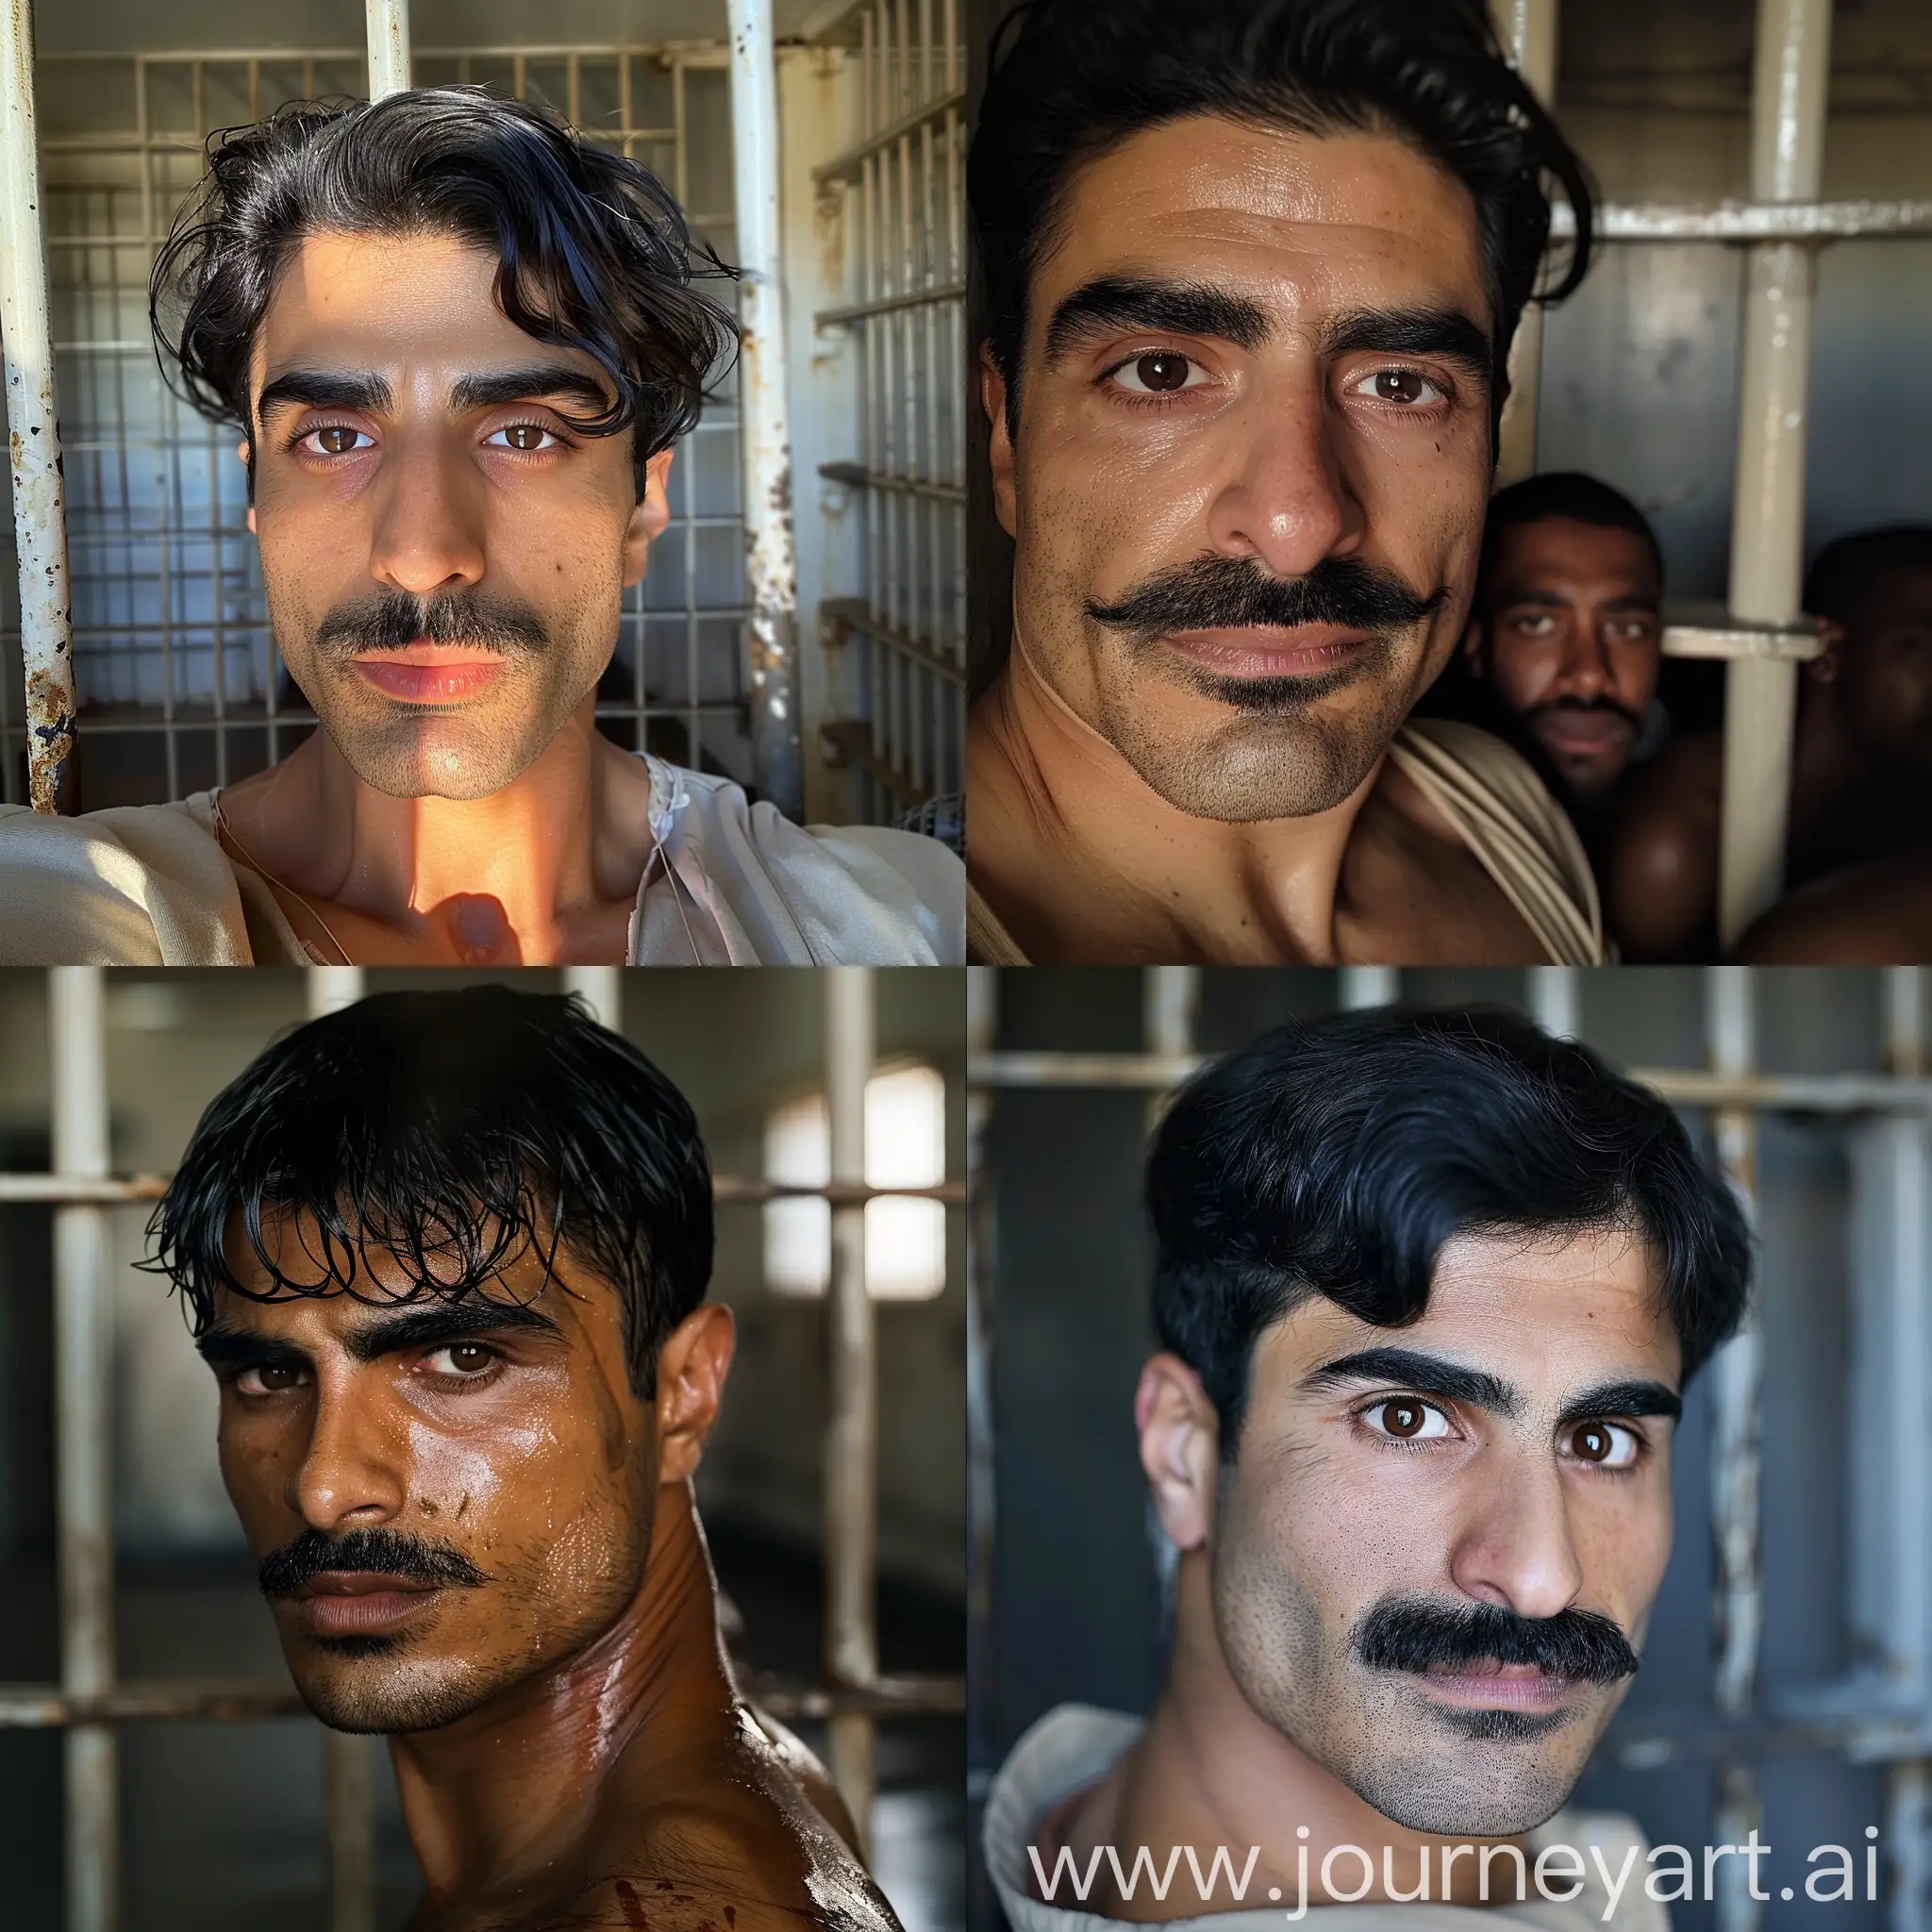 Iranian-Man-Facing-Discrimination-in-Los-Angeles-Prison